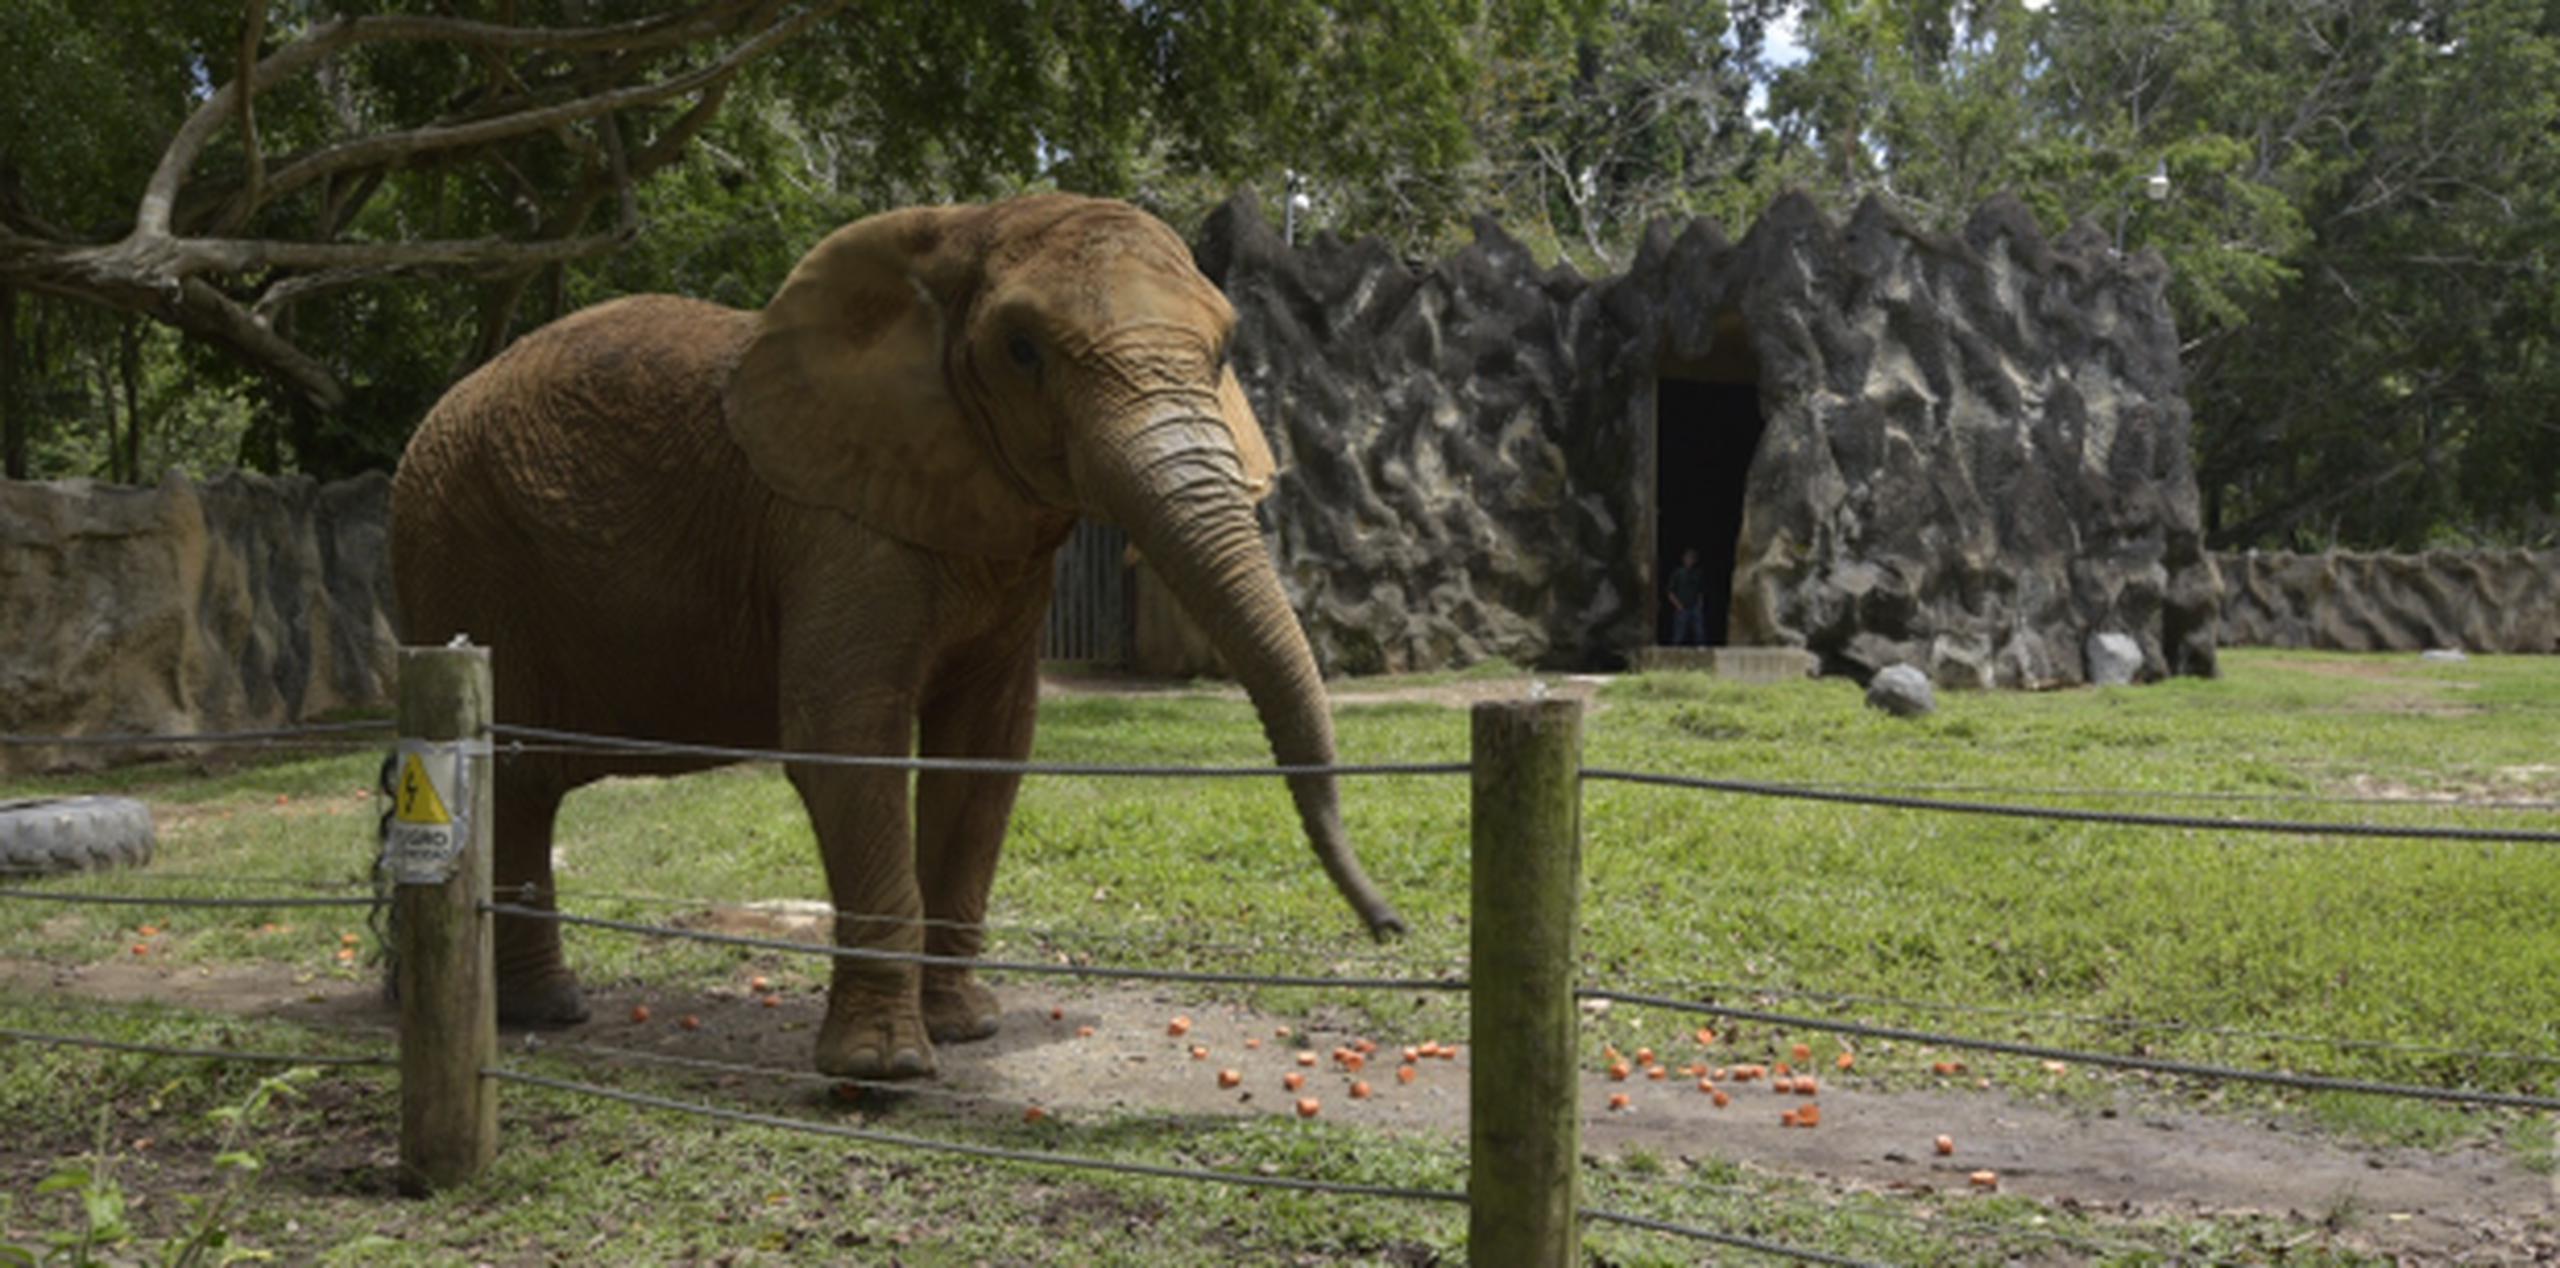 La elefanta Mundi ya tiene 36 años. (Suministrada)